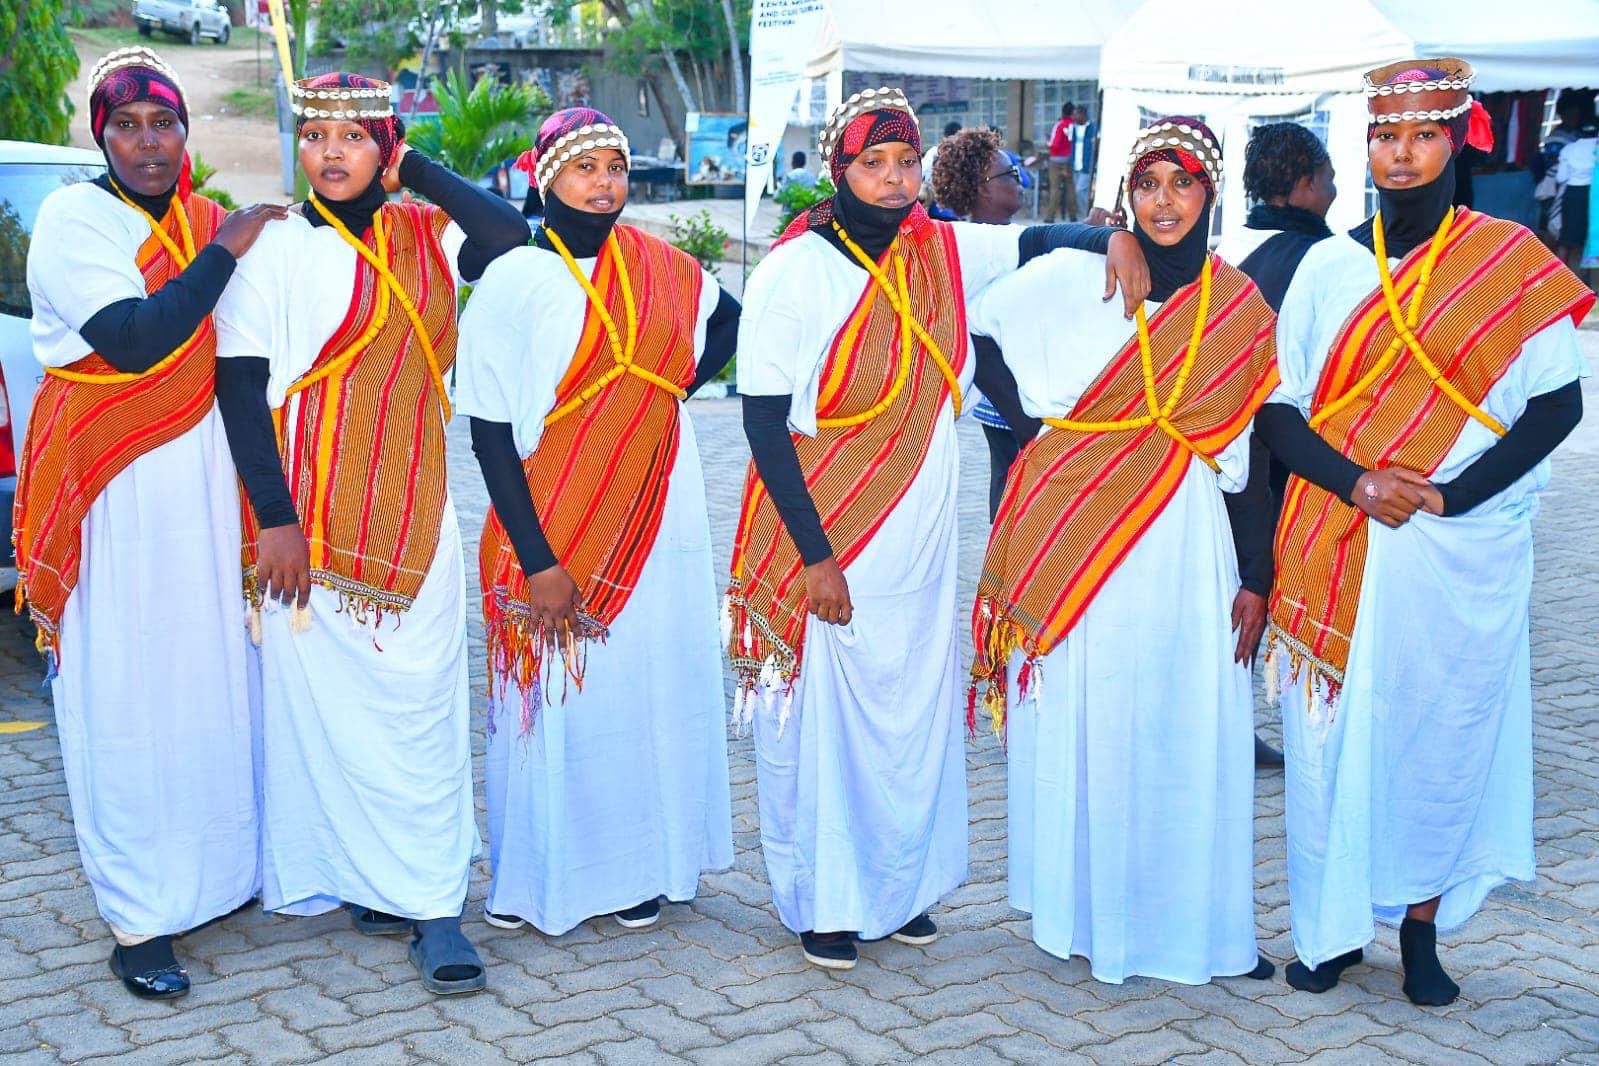 Gargar cultural team triumphs in Kenya Music and Cultural Festival